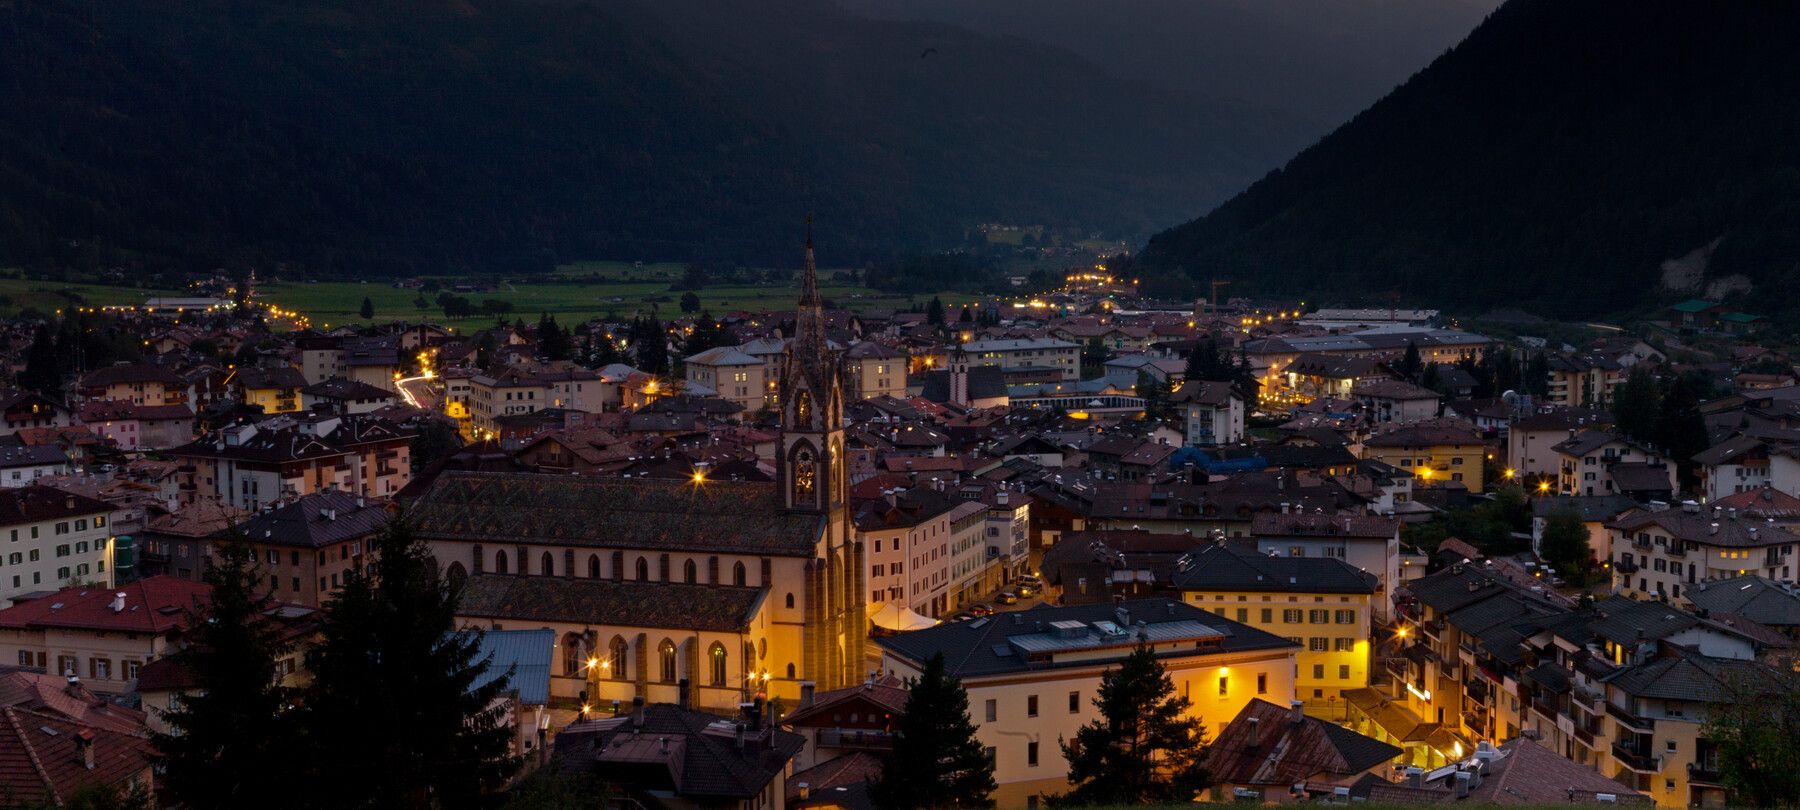 The Dolomites, a precious site for science and nature: the Nave d’Oro in Predazzo